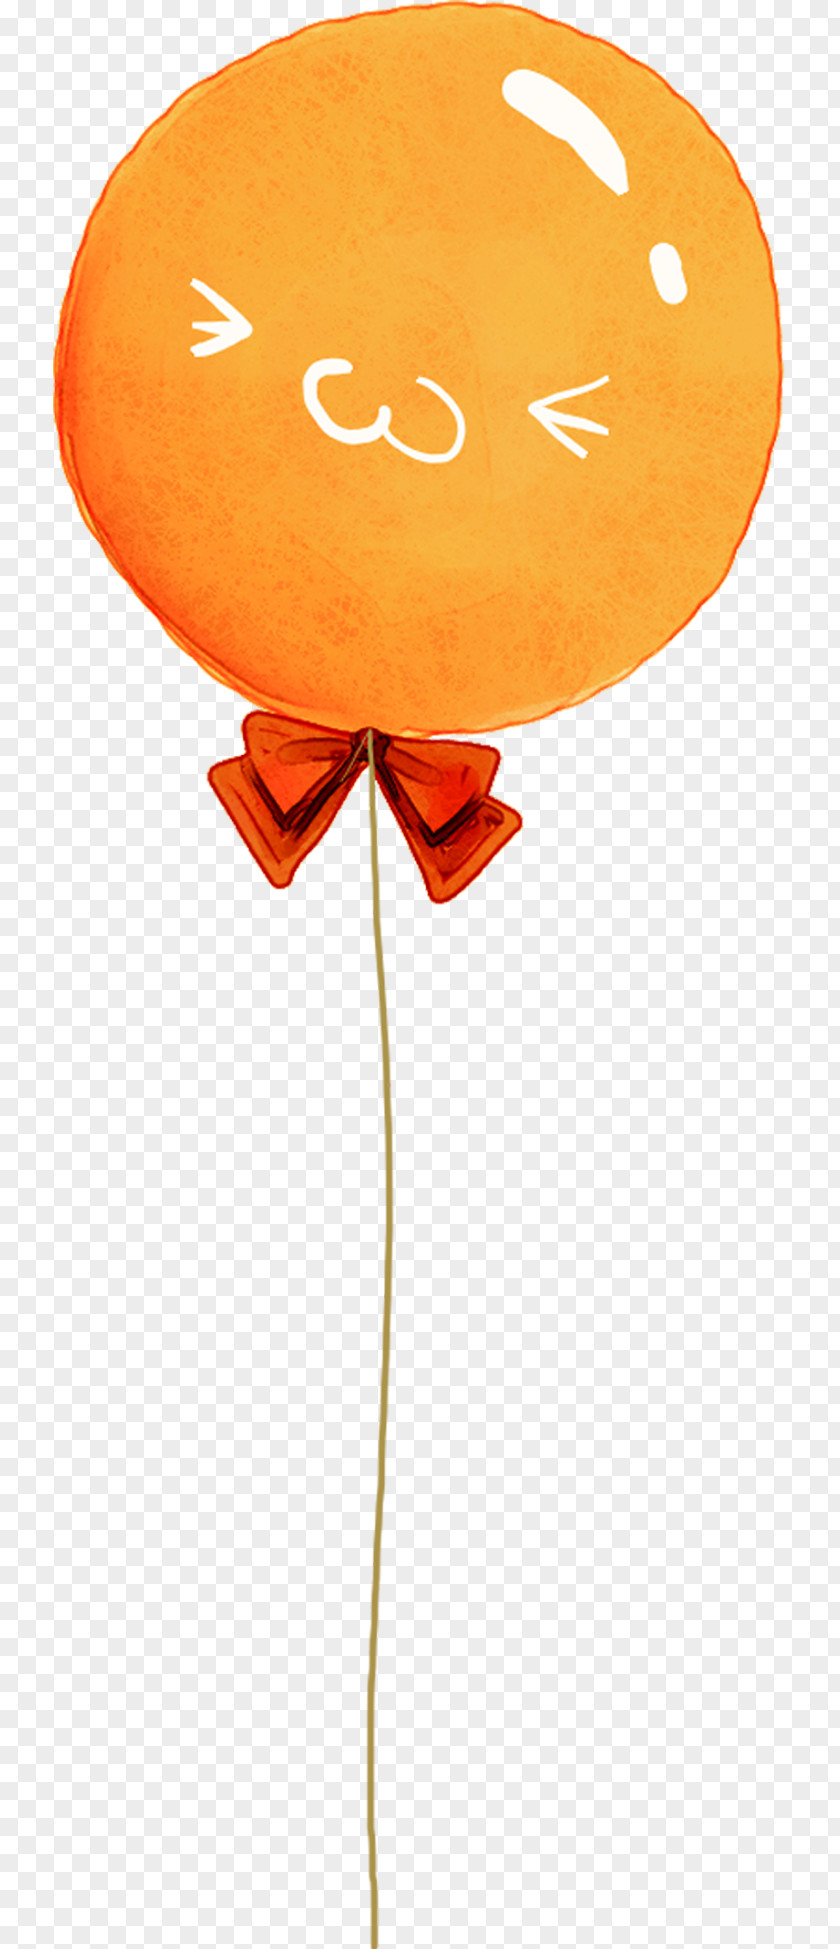 Cartoon Orange Balloon PNG